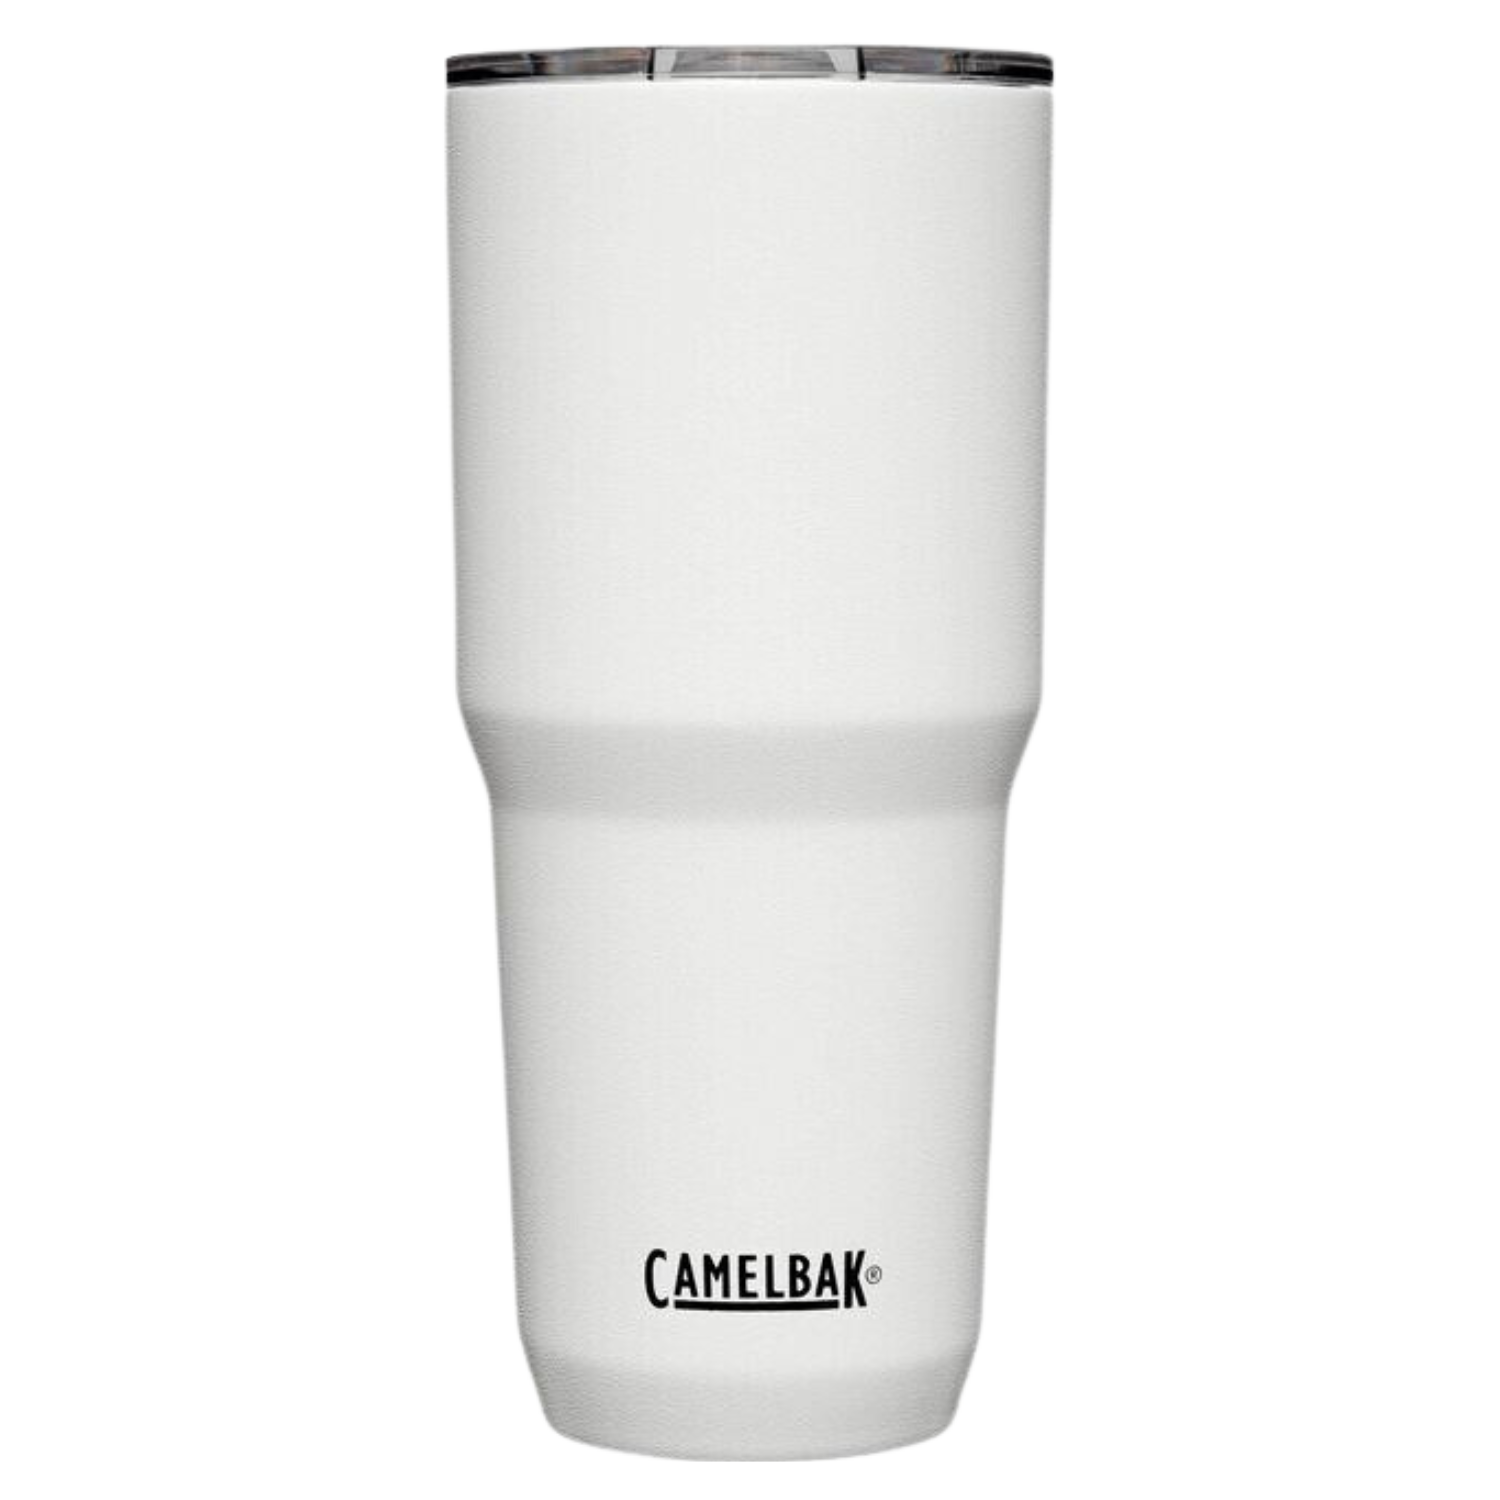 Camelbak 30oz Vacuum Insulated Stainless Steel Tumbler - White